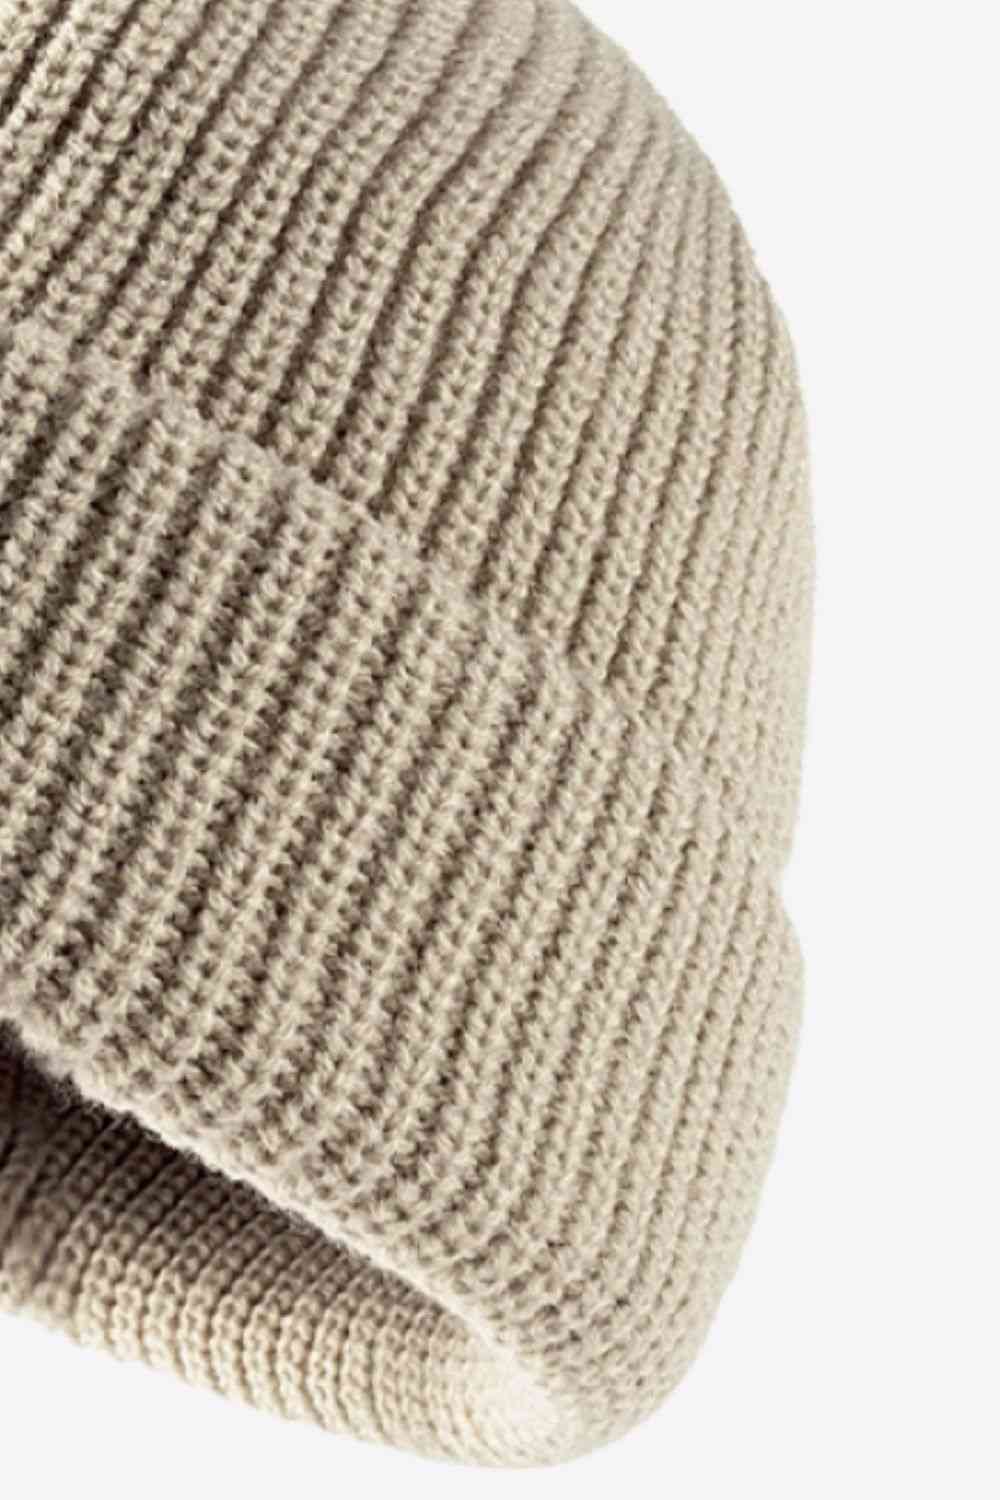 CHIC HATZ Calling For Winter Hat Rib-Knit Beanie